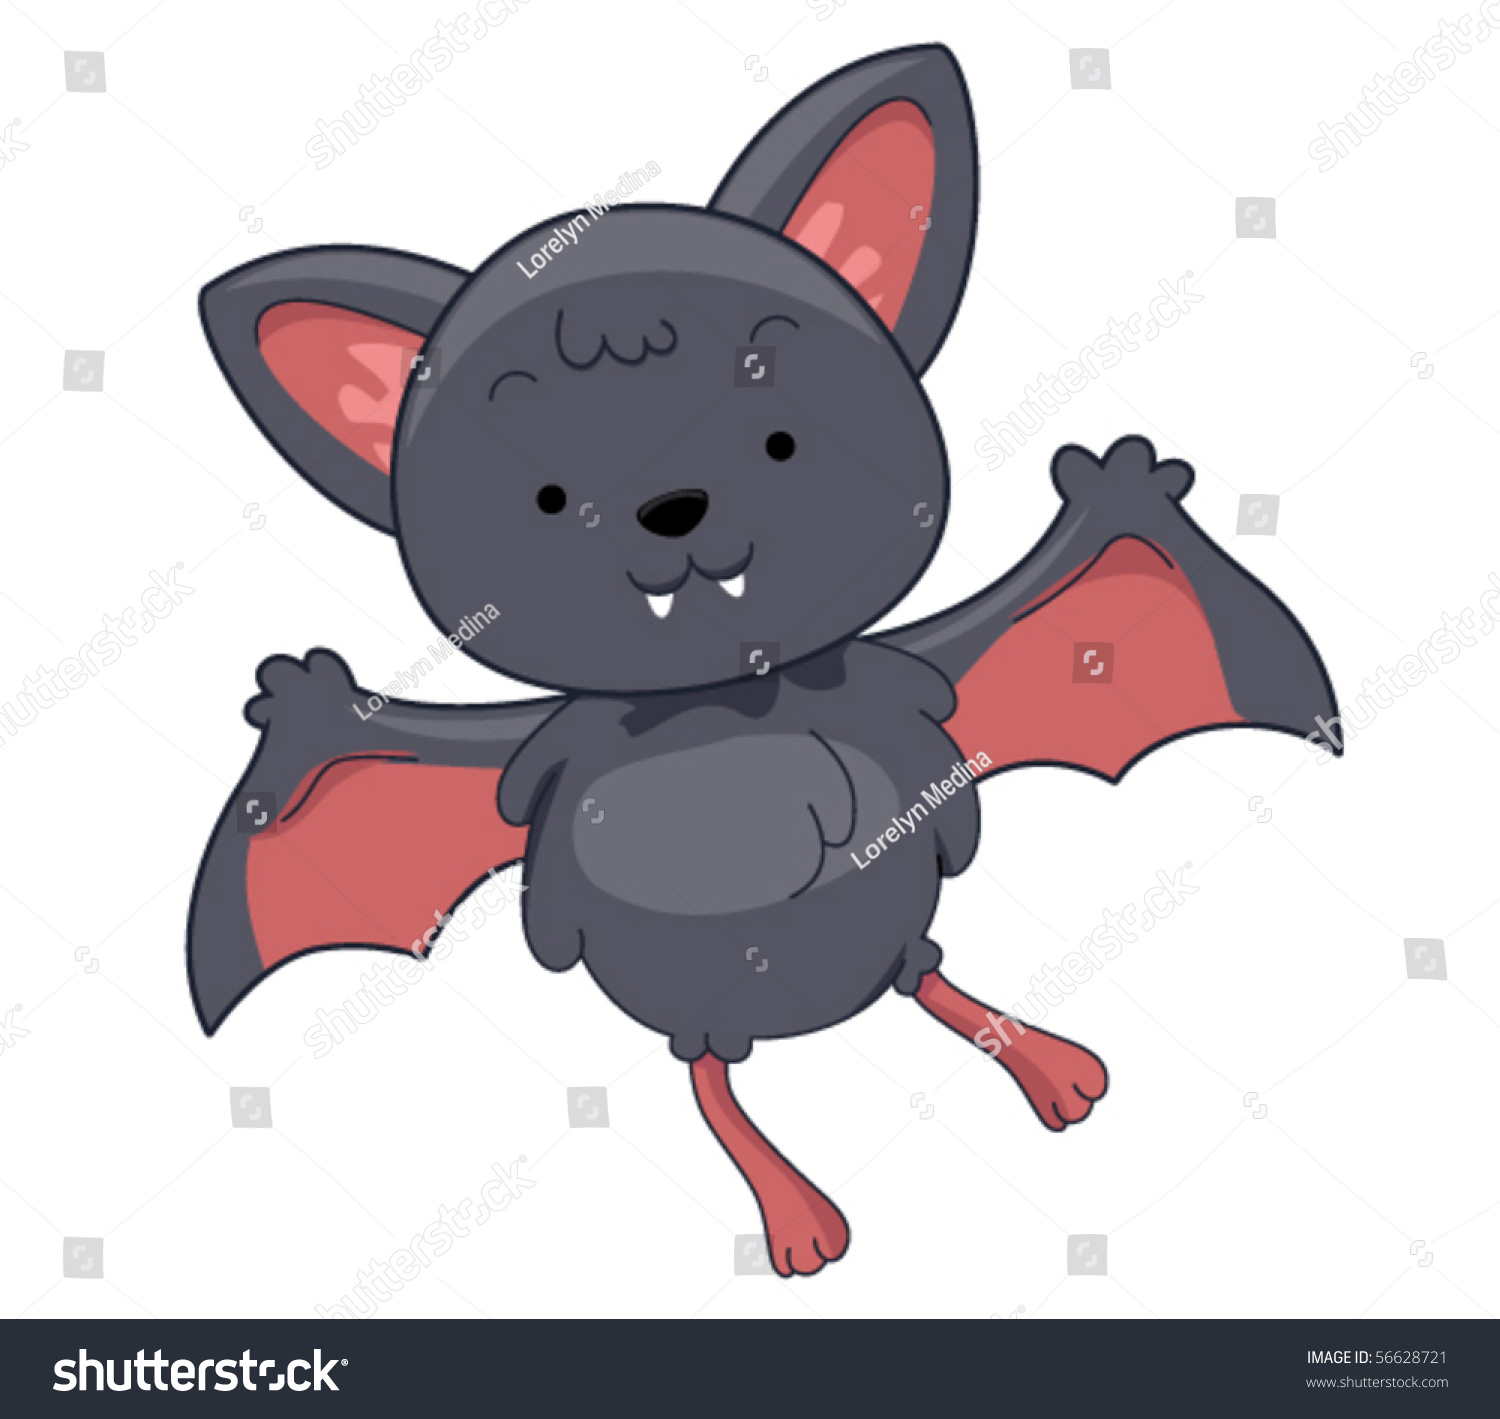 Cute Bat Vector Stock Vector 56628721 - Shutterstock